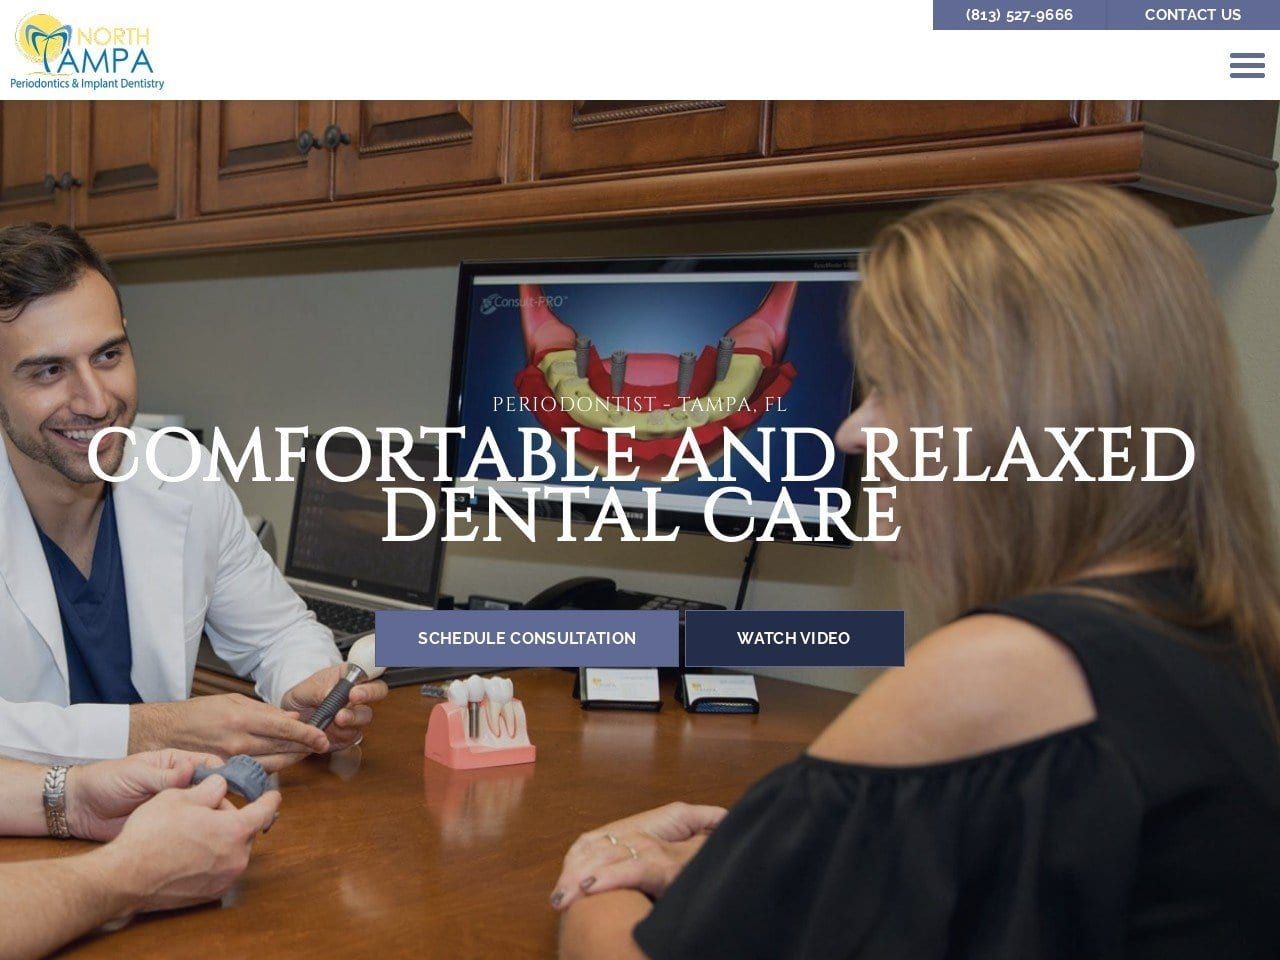 North Tampa Periodontics Dentist Website Screenshot from smileframers.com